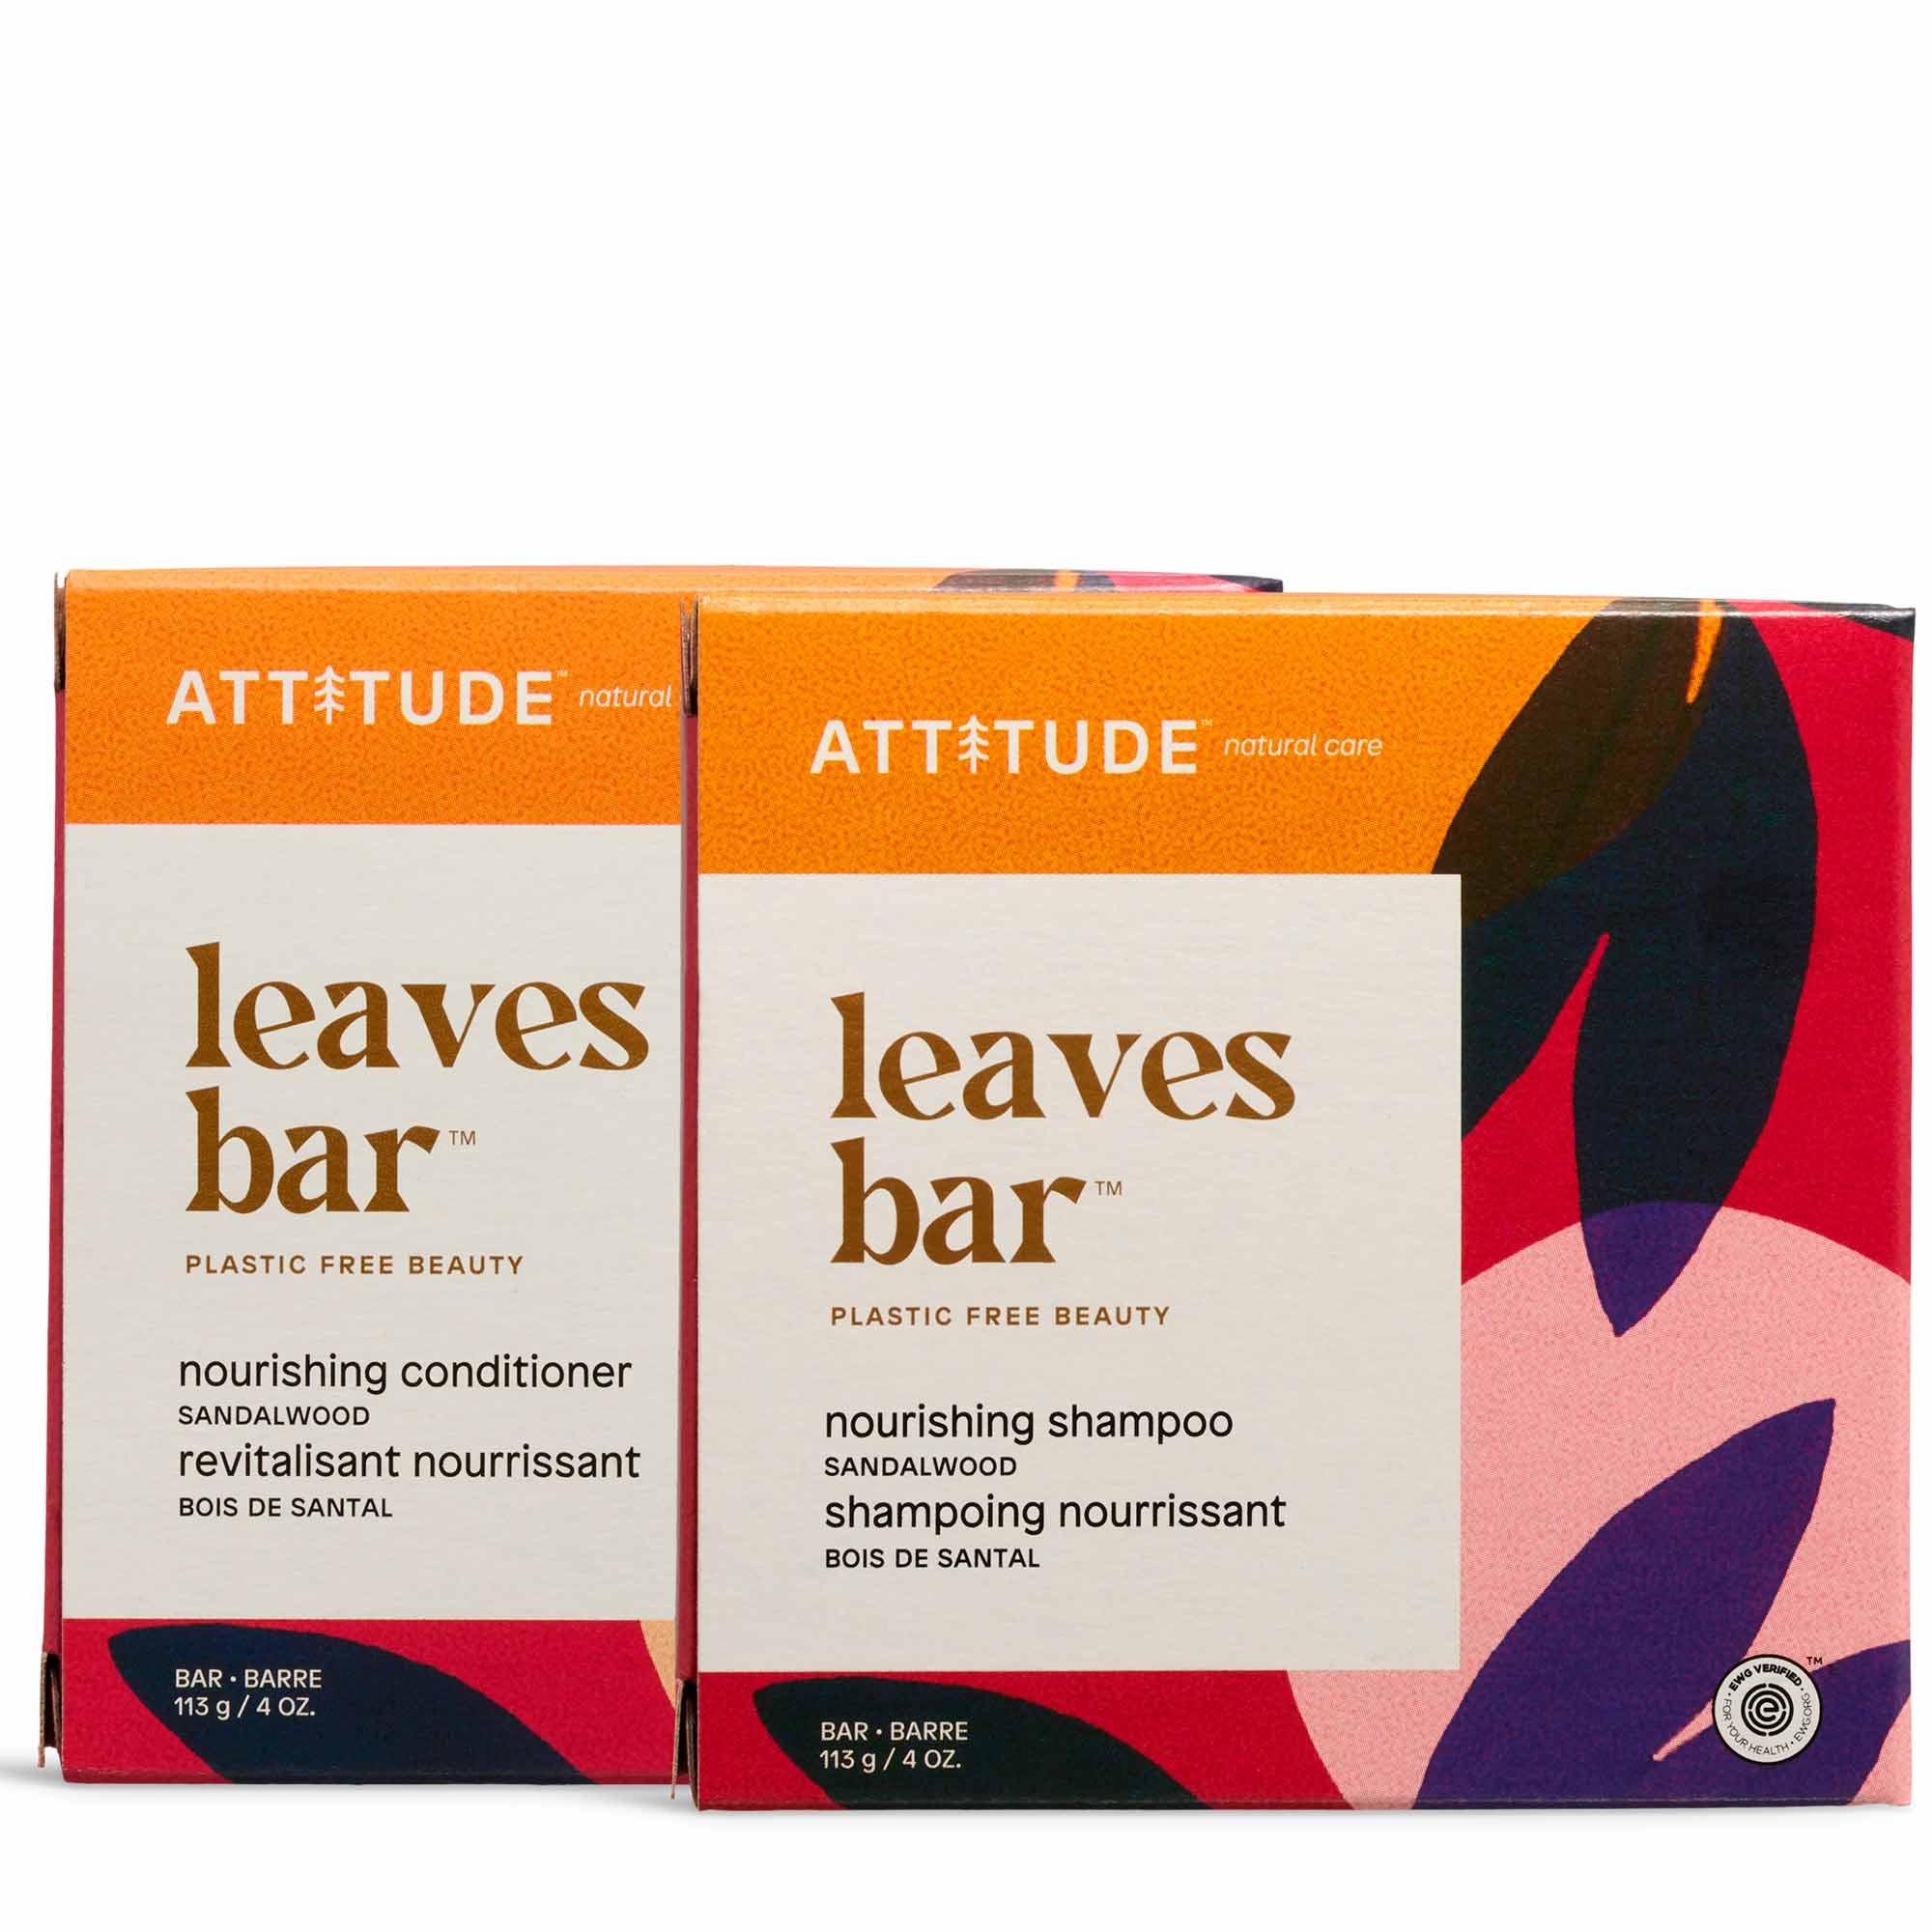 Nourishing Shampoo & Conditioner Bar Duo : leaves bar™